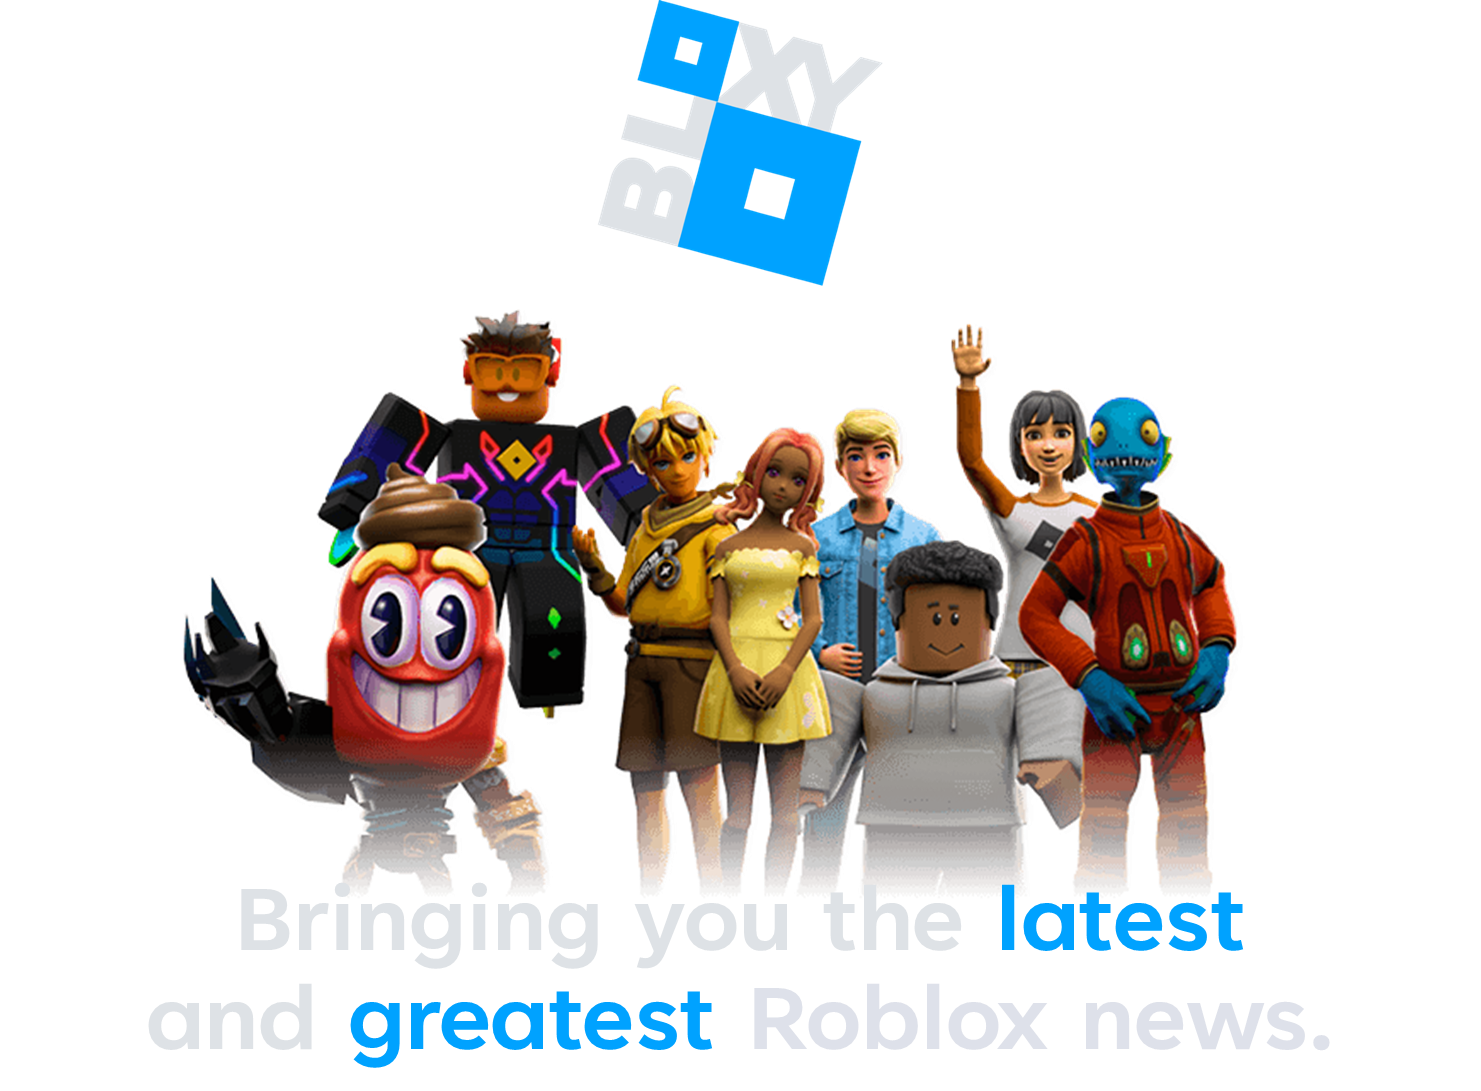 Bloxy News on X: #BloxyNews  It's day #2 of the #Roblox